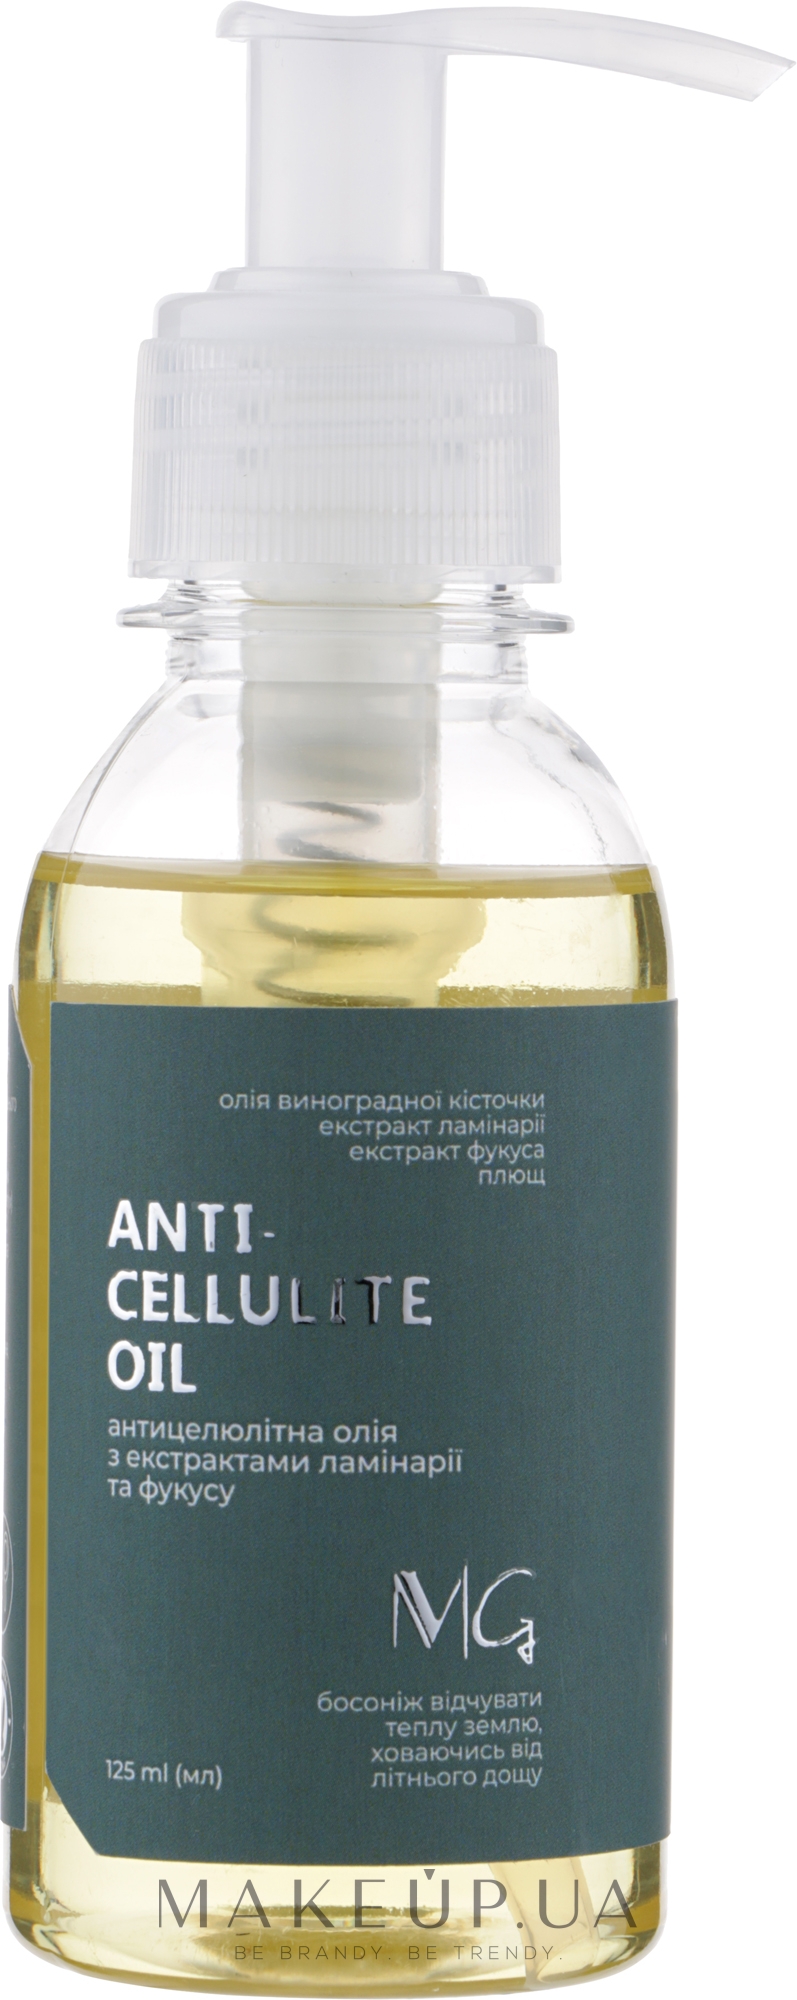 Антицеллюлитное масло с экстрактами ламинарии и фукуса - MG Anti-Cellulite Oil — фото 125ml